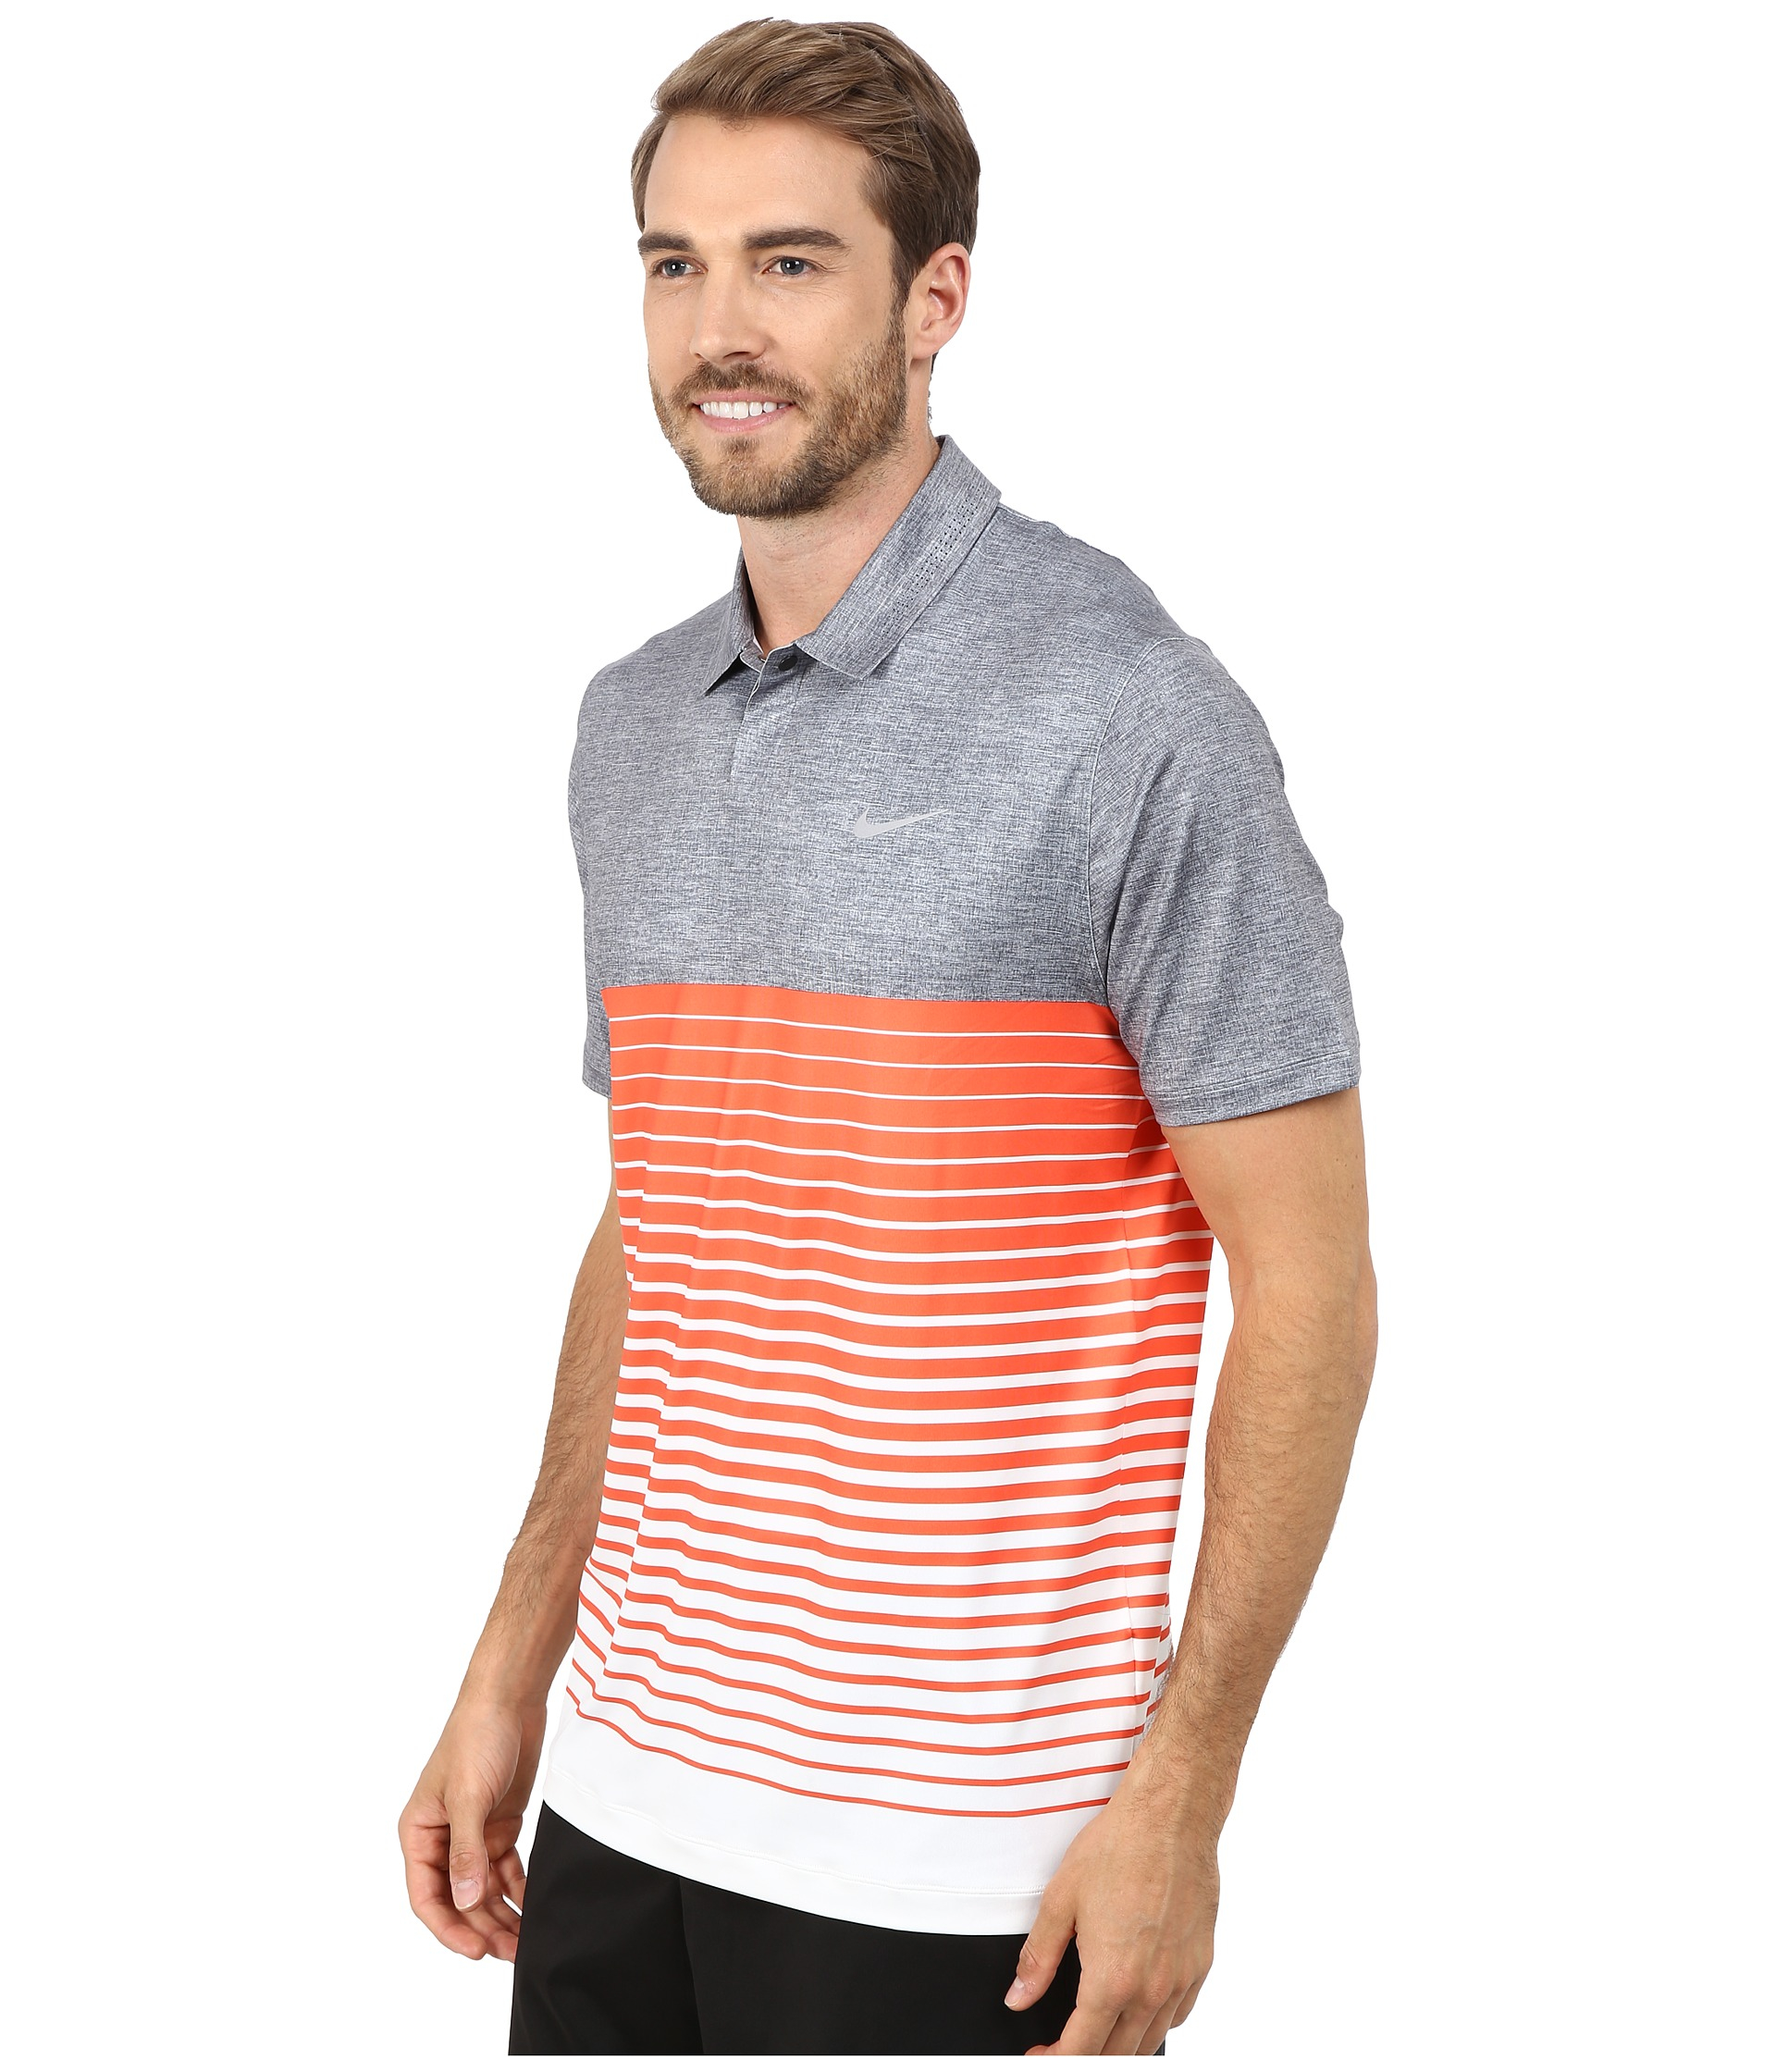 Nike Bold Stripe Polo in Gray for Men - Lyst